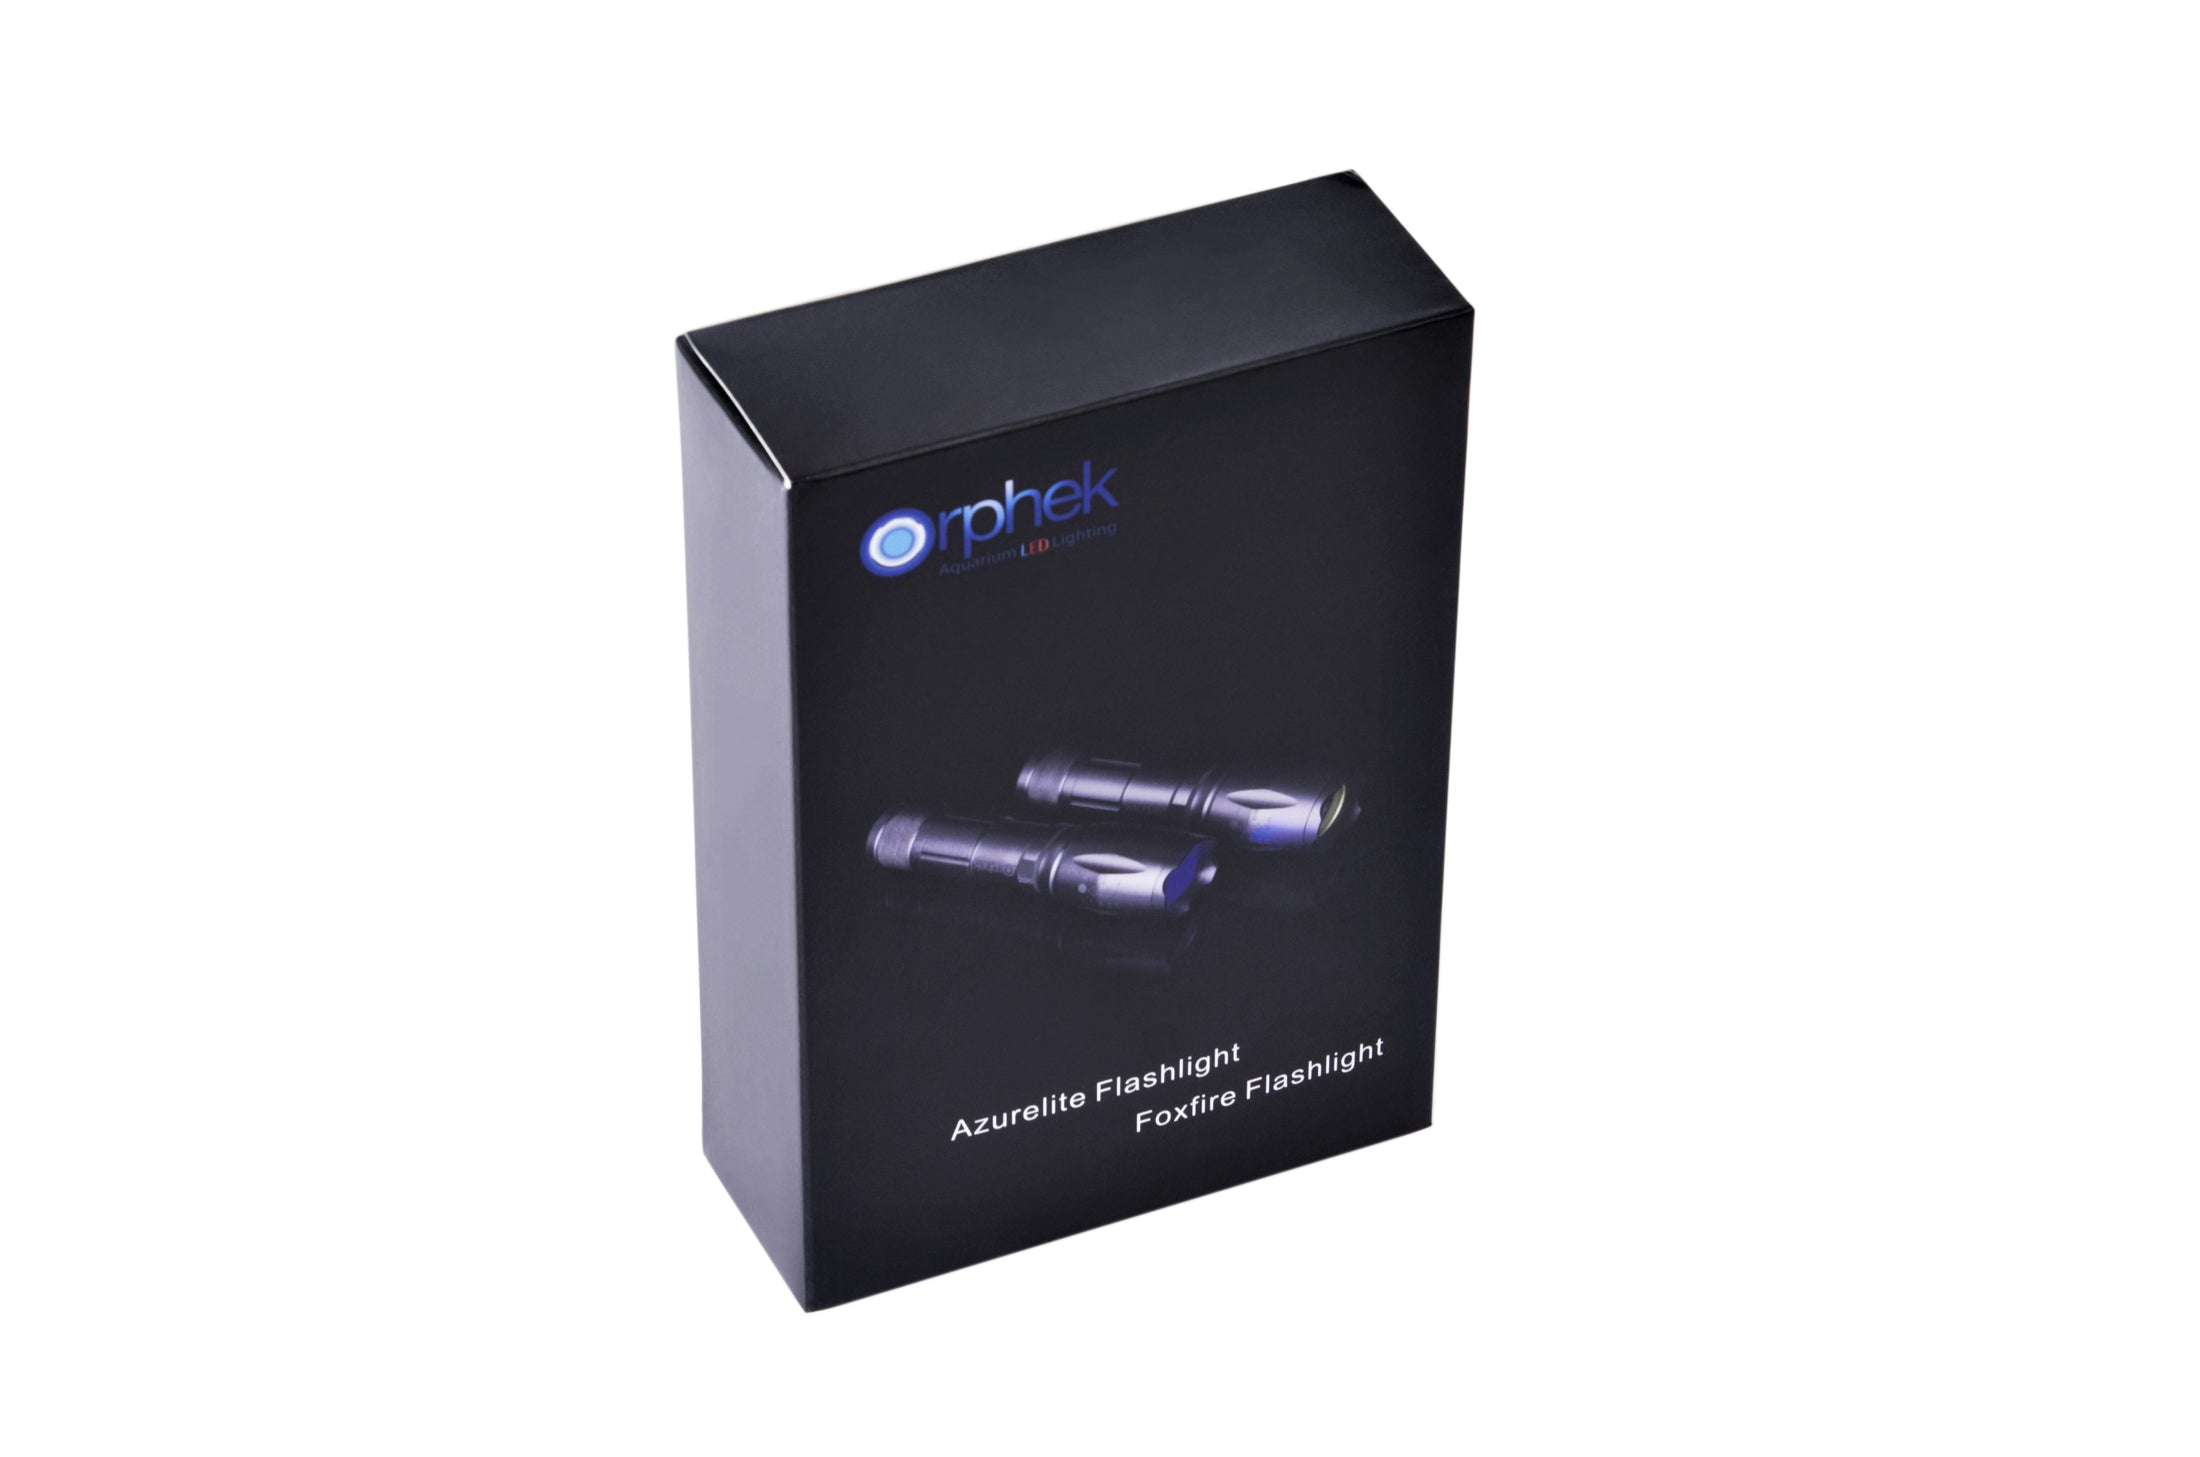 Orphek 懐中電灯コンボ - Azurelite 2 ブルー LED / Fox Fire ホワイト LED 超高輝度